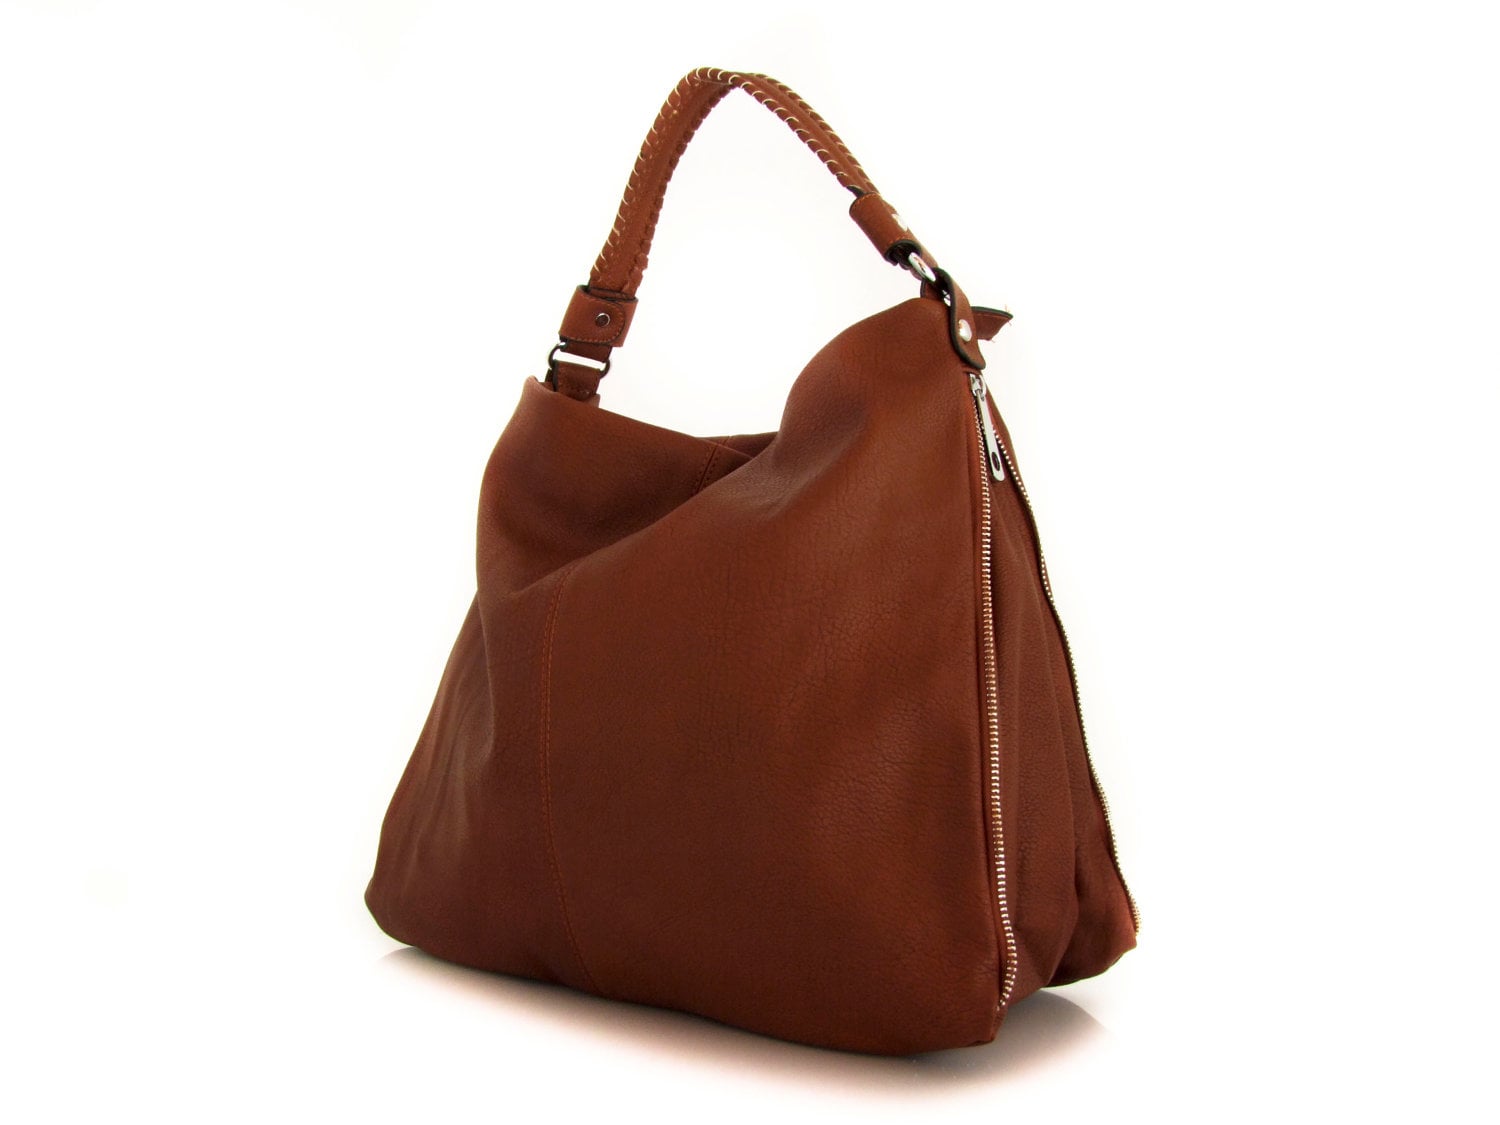 vegan leather handbag purse brown the by VeganLeatherHandbags